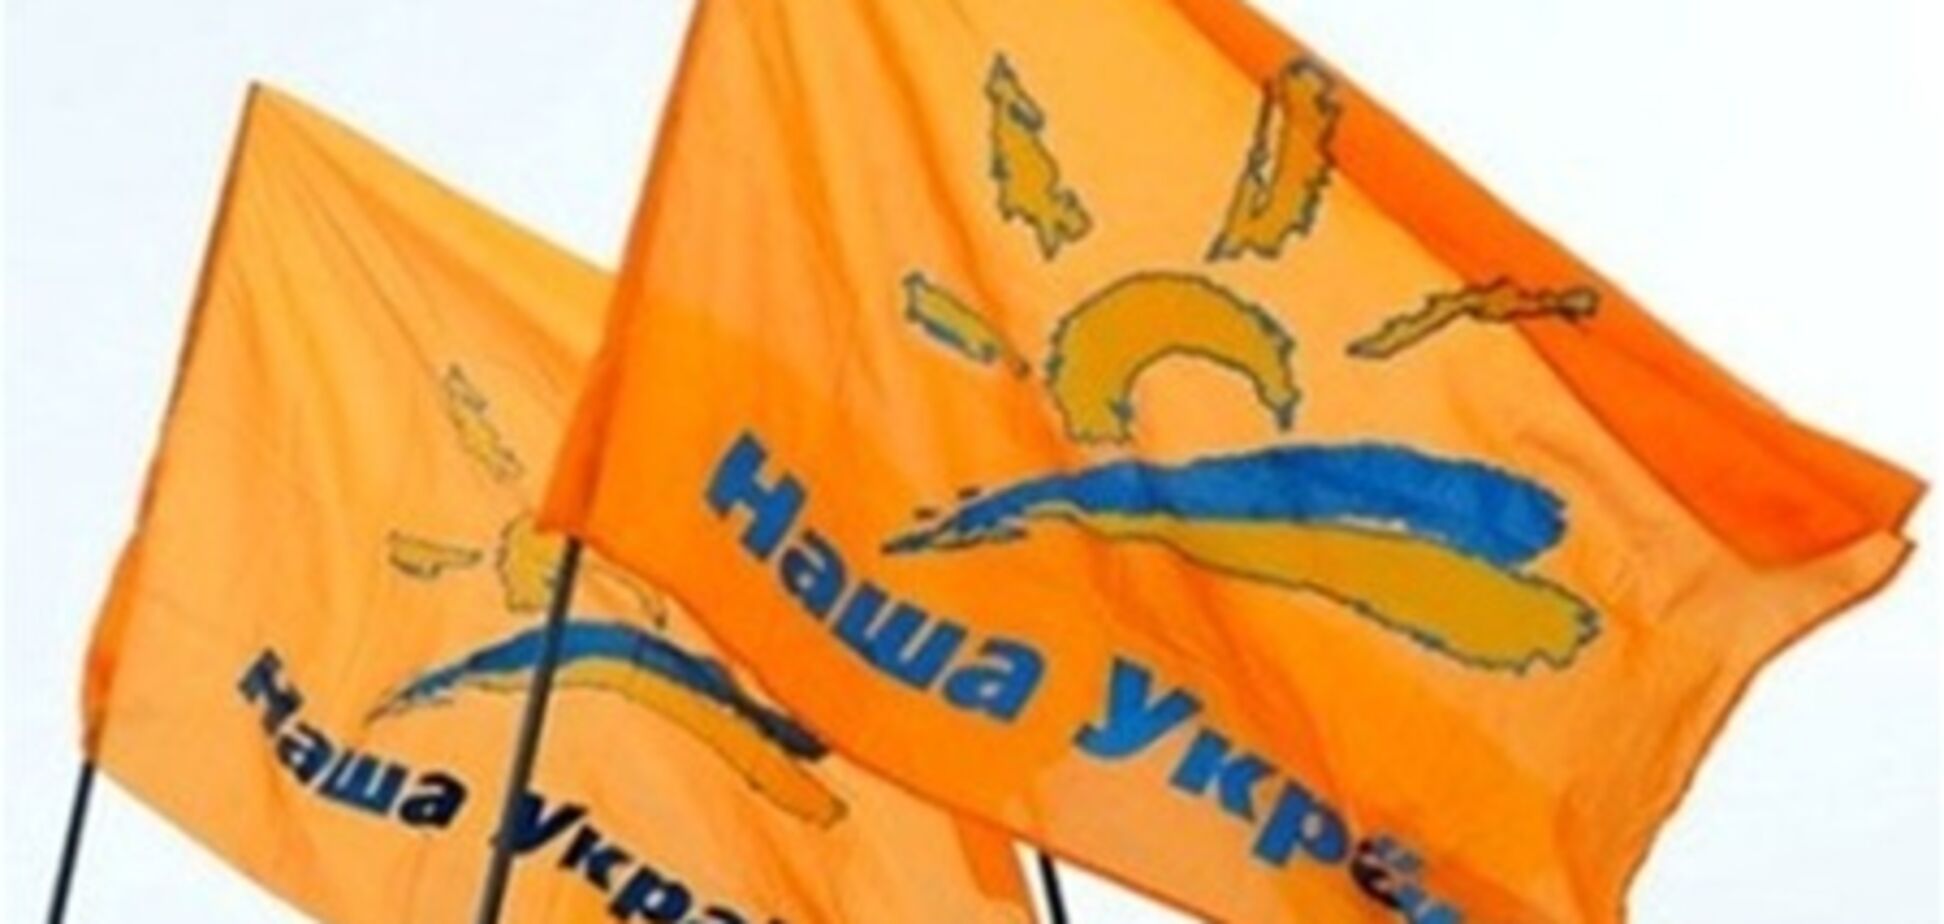 Ющенко збирає 'Нашу Україну' 18 травня